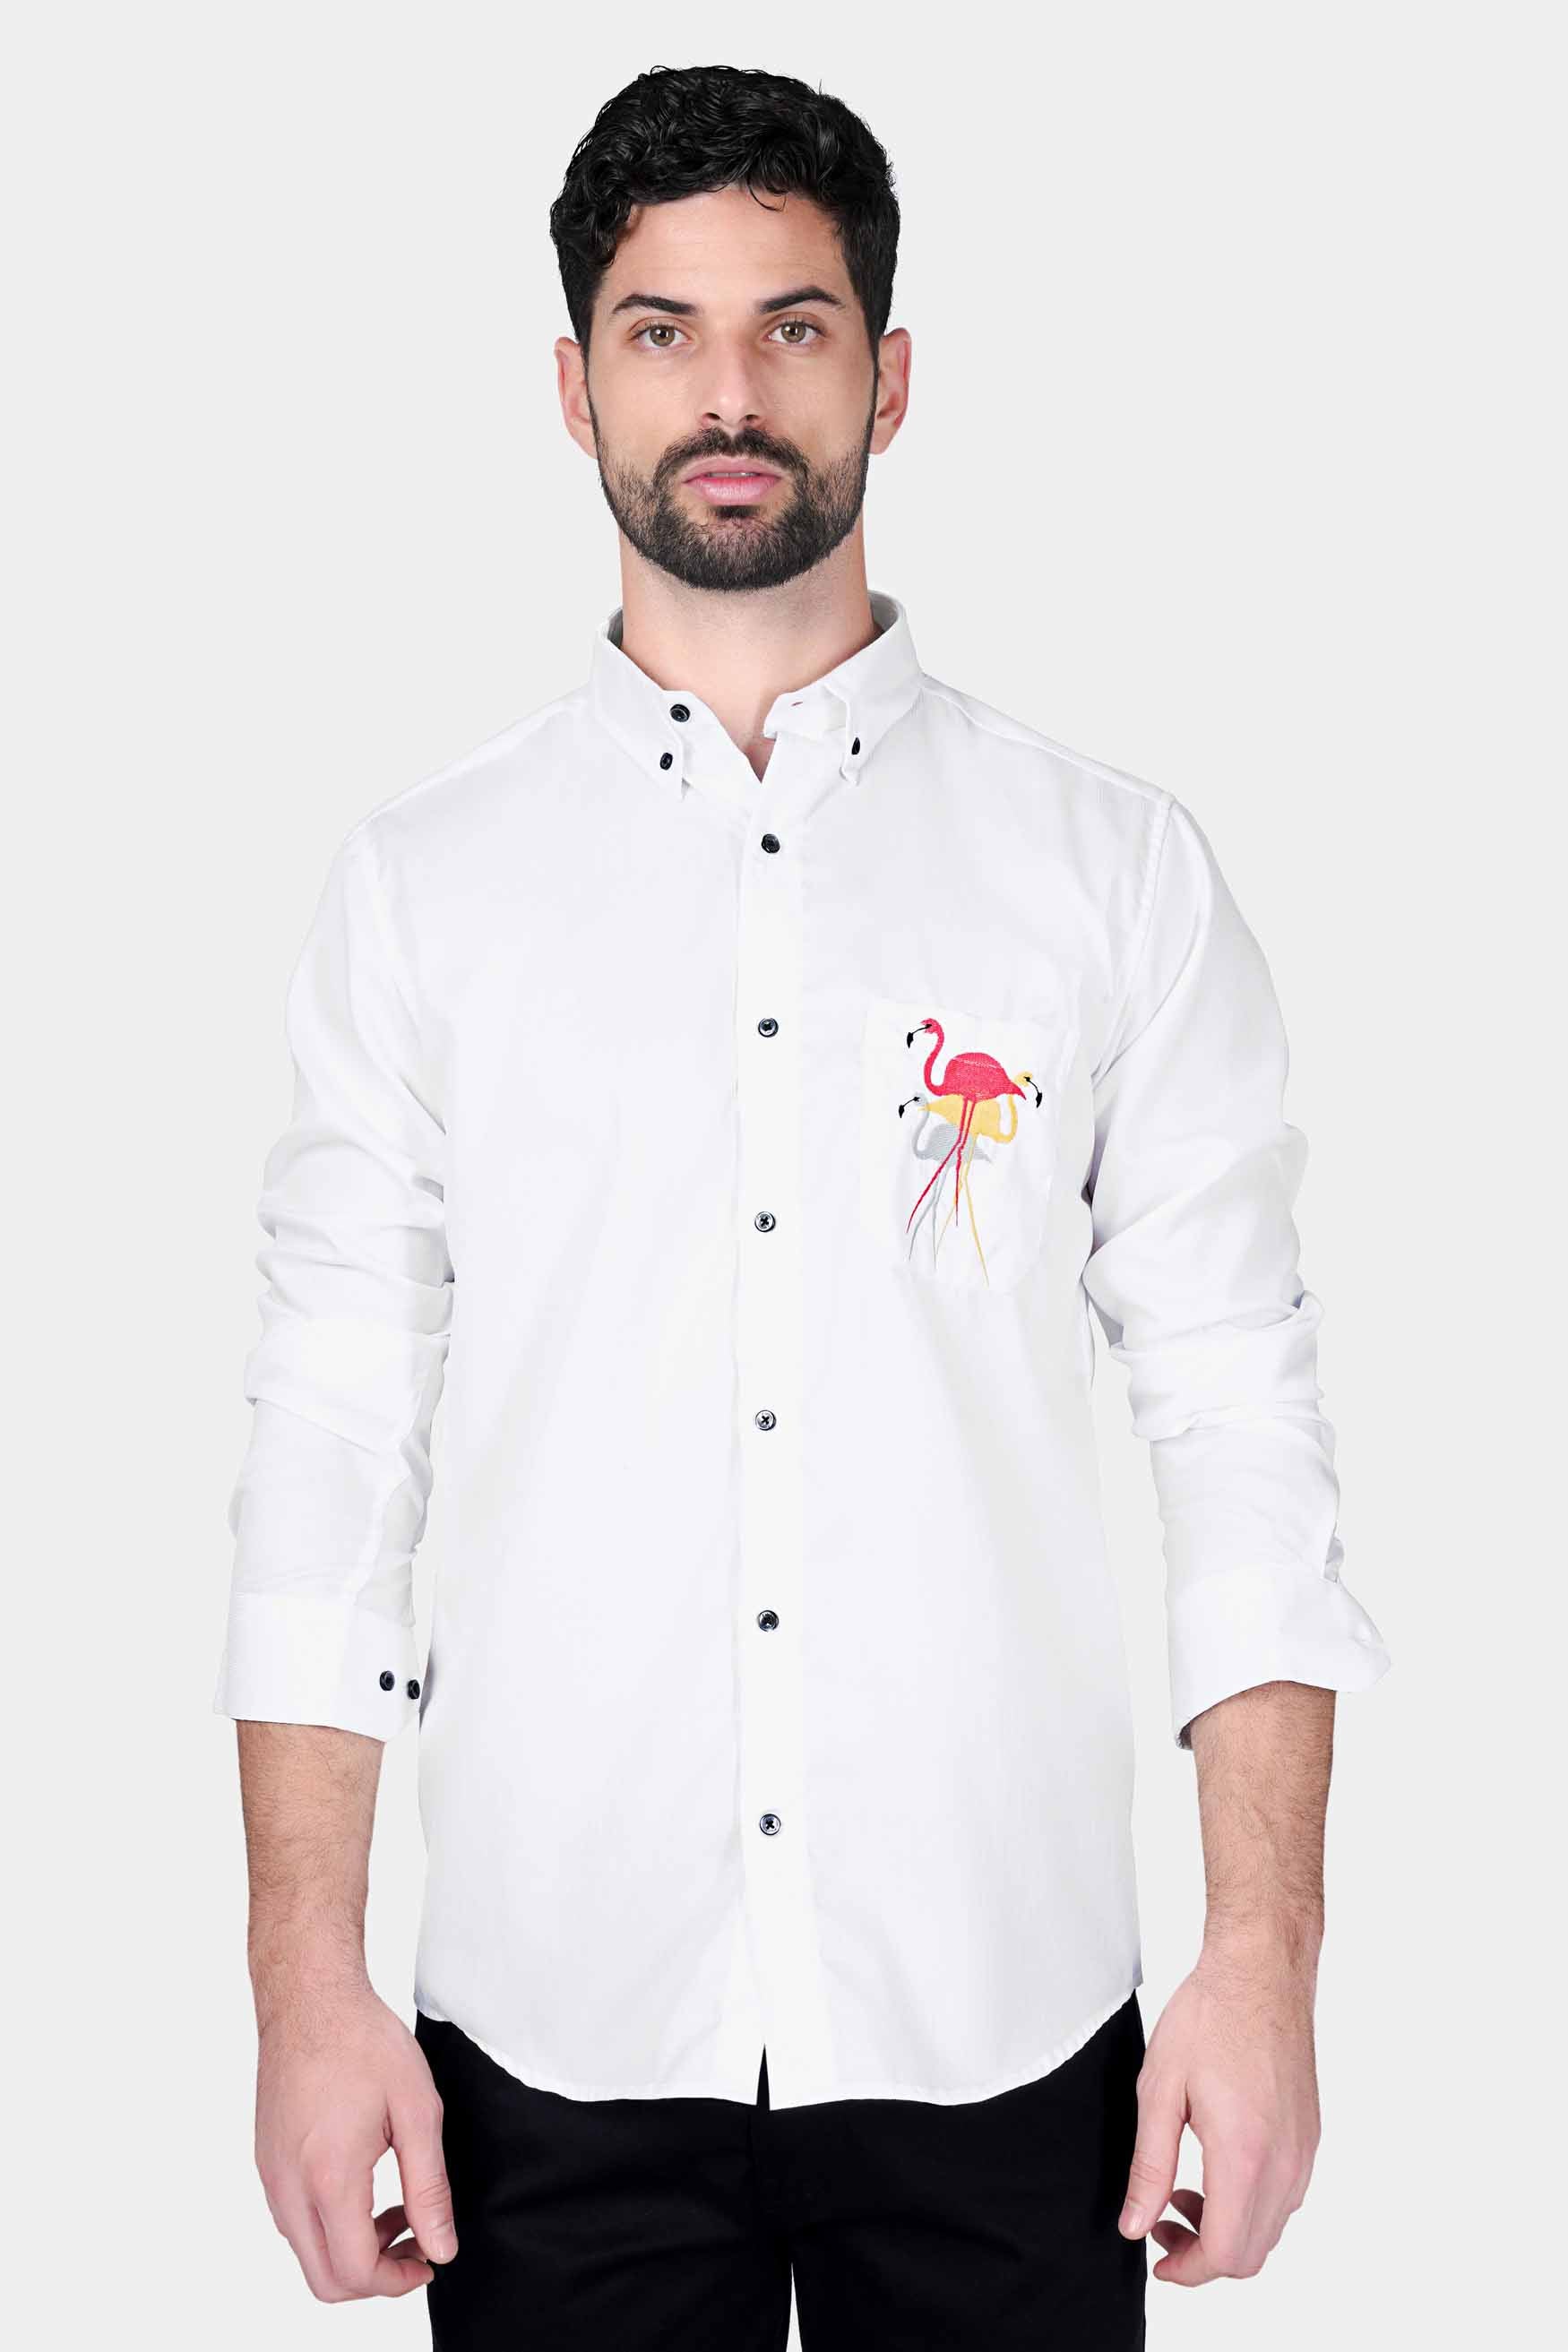 Bright White Flamingo Embroidered Dobby Textured Premium Giza Cotton Designer Shirt 6228-BD-BLK-E330-38, 6228-BD-BLK-E330-H-38, 6228-BD-BLK-E330-39, 6228-BD-BLK-E330-H-39, 6228-BD-BLK-E330-40, 6228-BD-BLK-E330-H-40, 6228-BD-BLK-E330-42, 6228-BD-BLK-E330-H-42, 6228-BD-BLK-E330-44, 6228-BD-BLK-E330-H-44, 6228-BD-BLK-E330-46, 6228-BD-BLK-E330-H-46, 6228-BD-BLK-E330-48, 6228-BD-BLK-E330-H-48, 6228-BD-BLK-E330-50, 6228-BD-BLK-E330-H-50, 6228-BD-BLK-E330-52, 6228-BD-BLK-E330-H-52